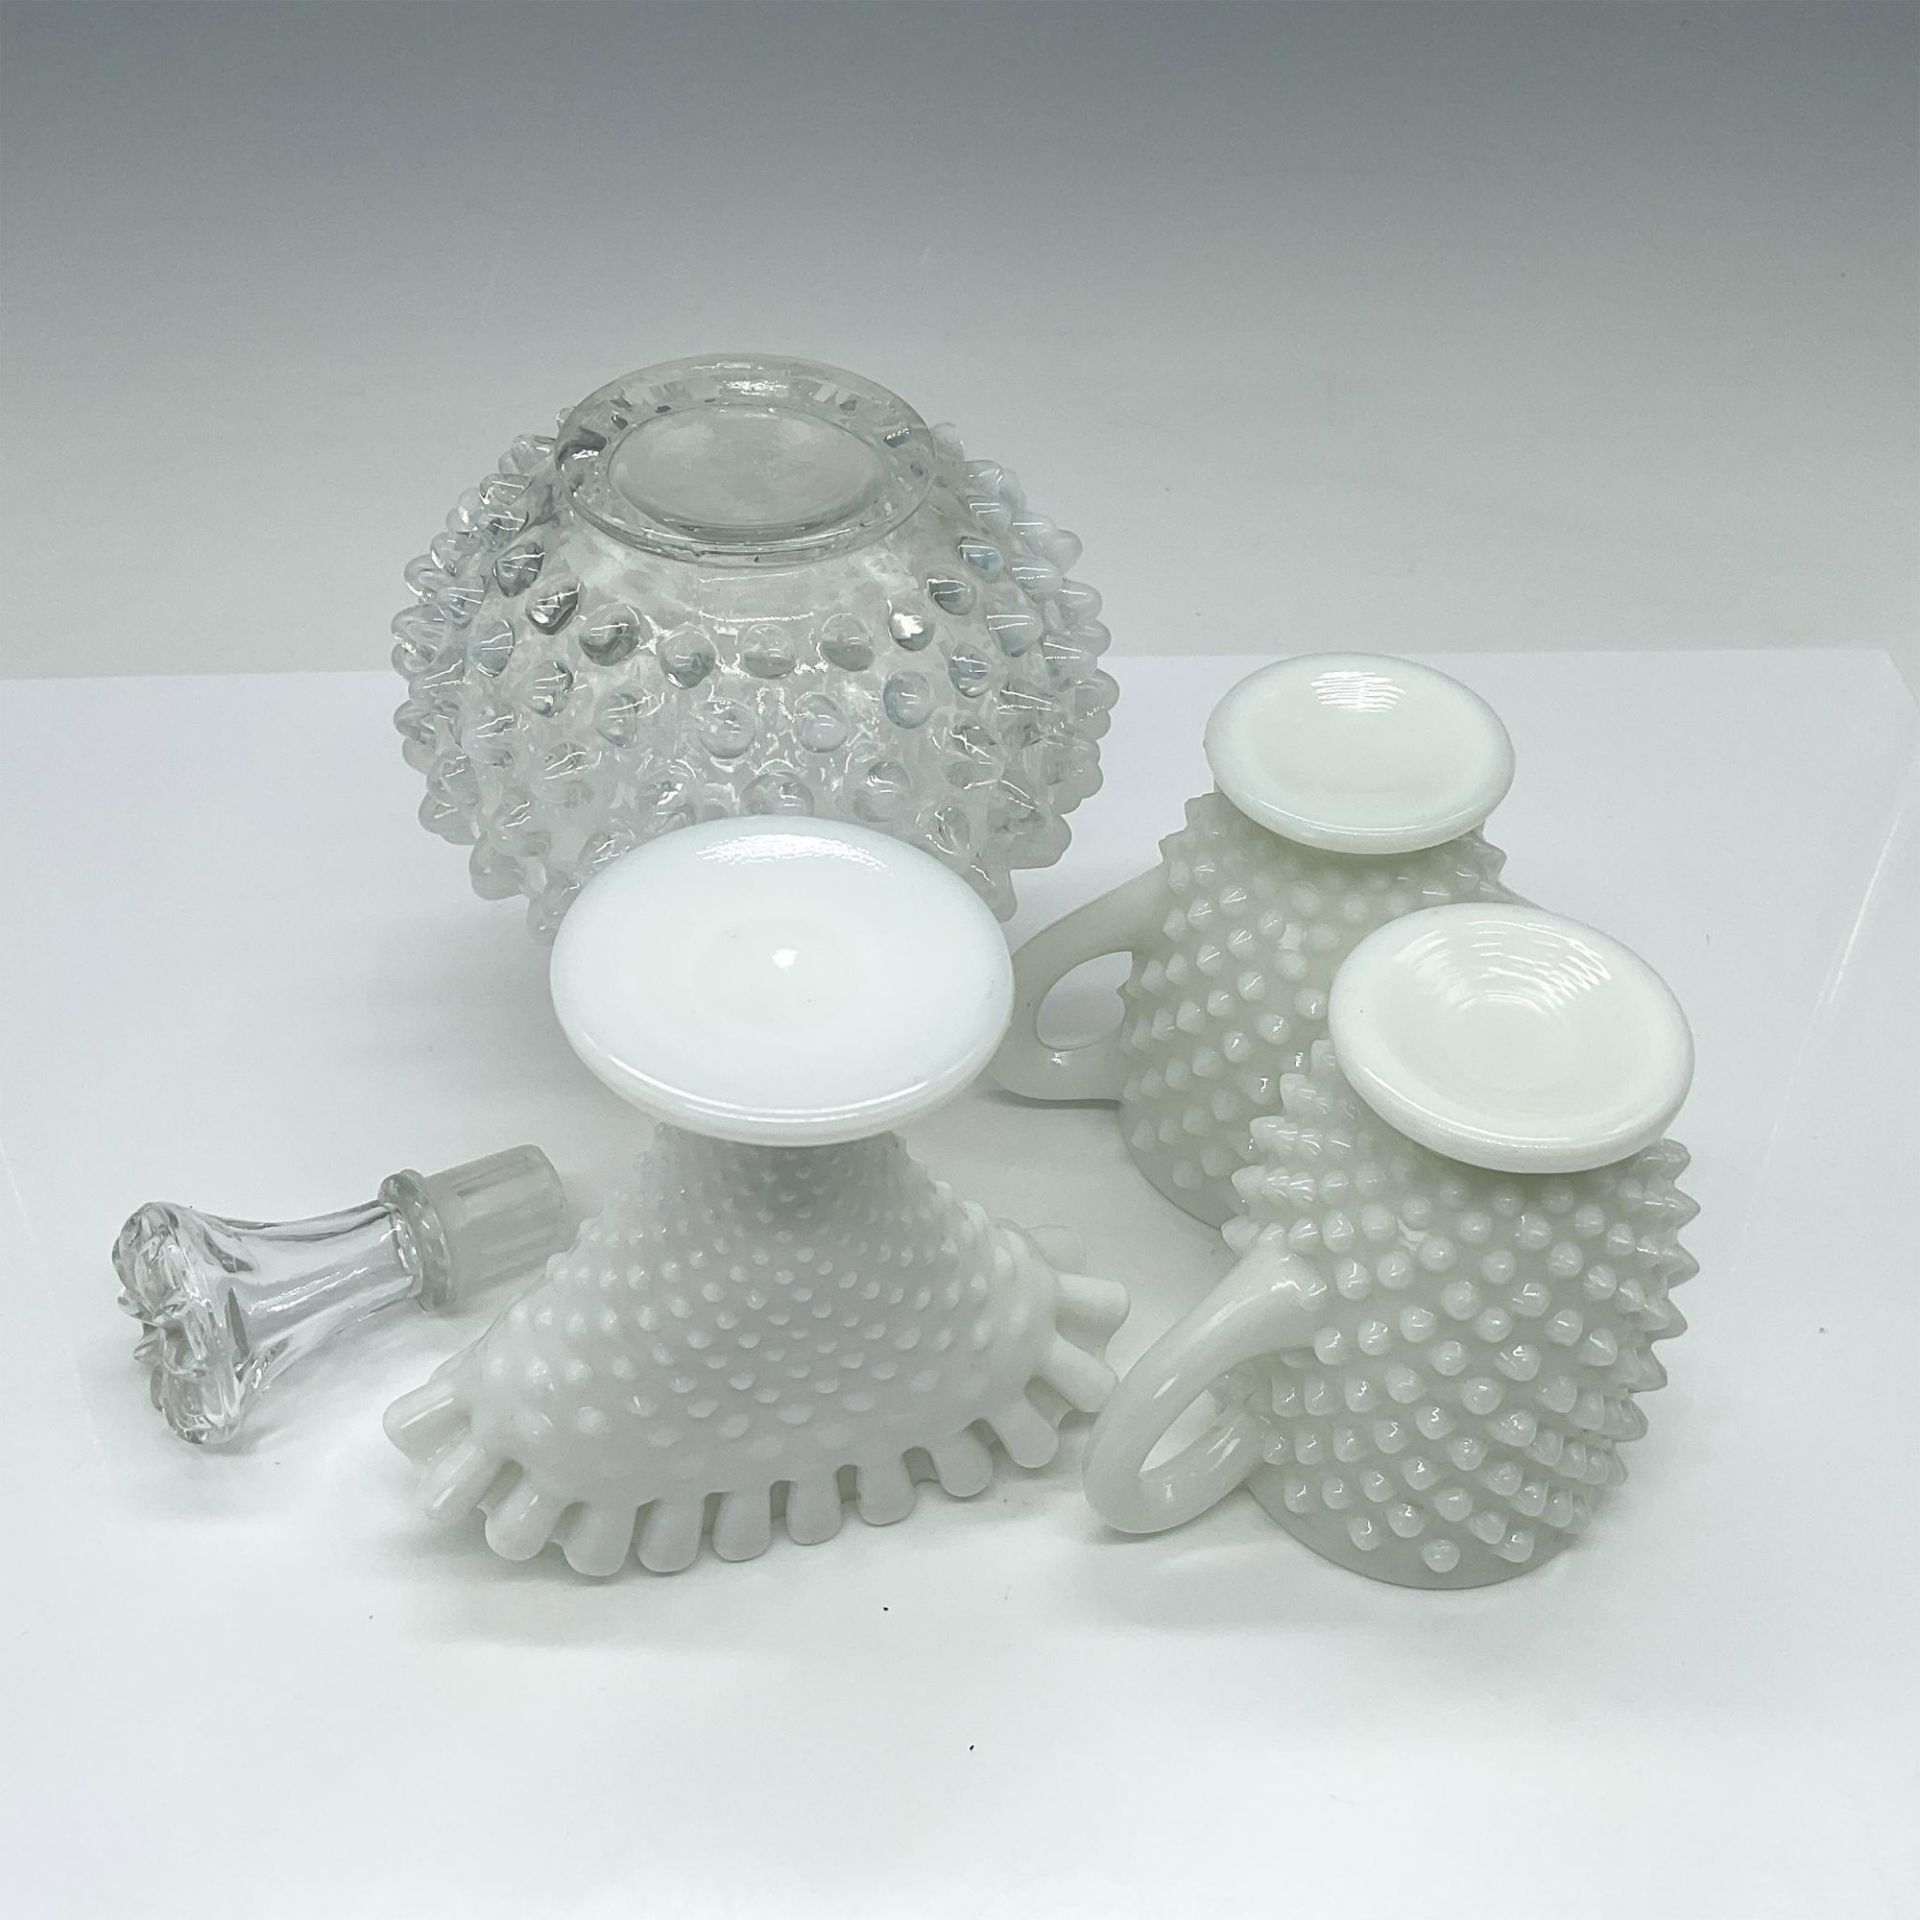 4pc Fenton Hobnail Milk Glass Dish Grouping - Image 3 of 3